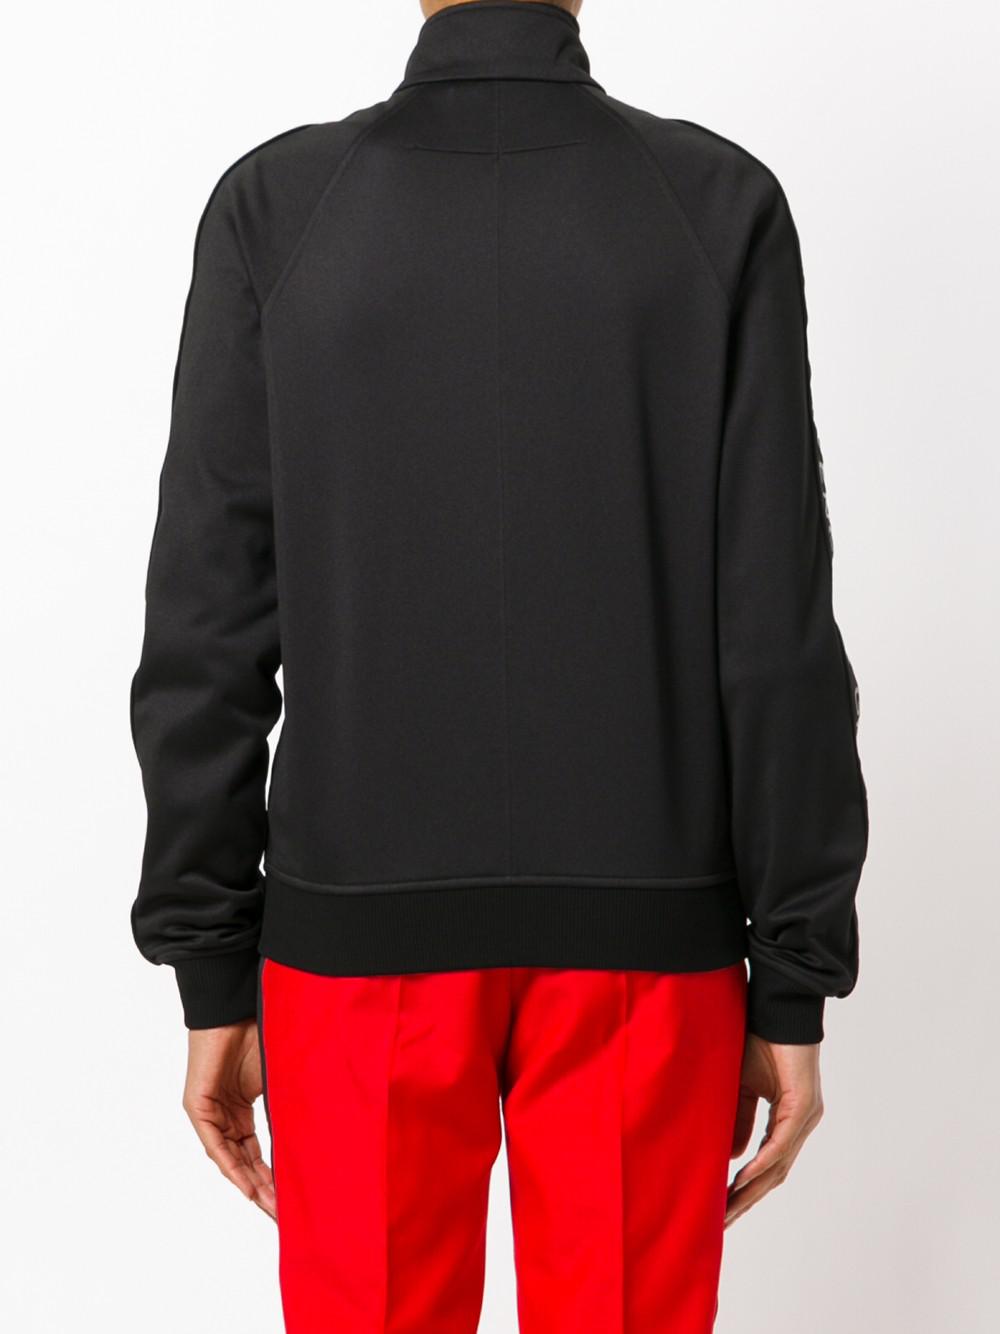 Lyst - Givenchy Jersey Sweatshirt